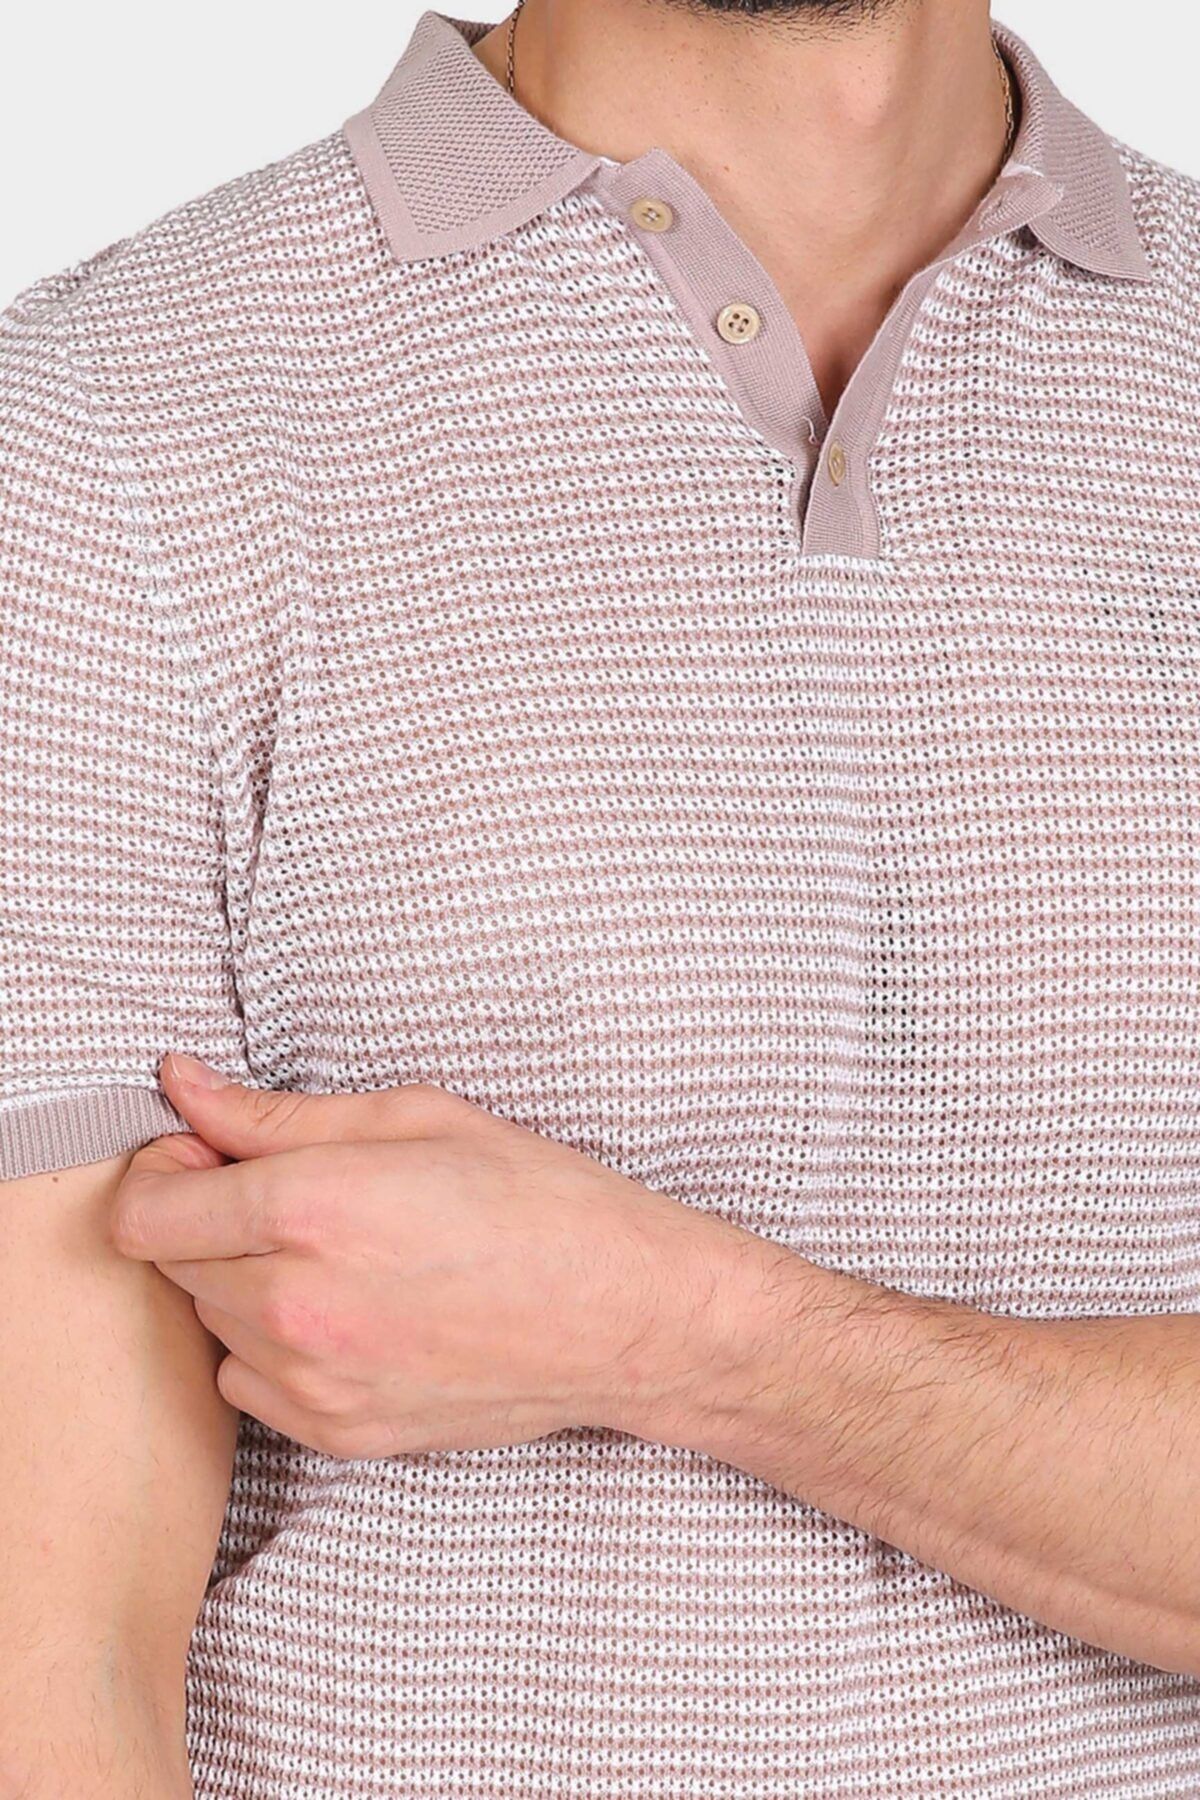 Ferraro Erkek Beyaz Çizgili Delikli Polo Yaka Düğmeli %100 Pamuk Triko T Shirt - Bej